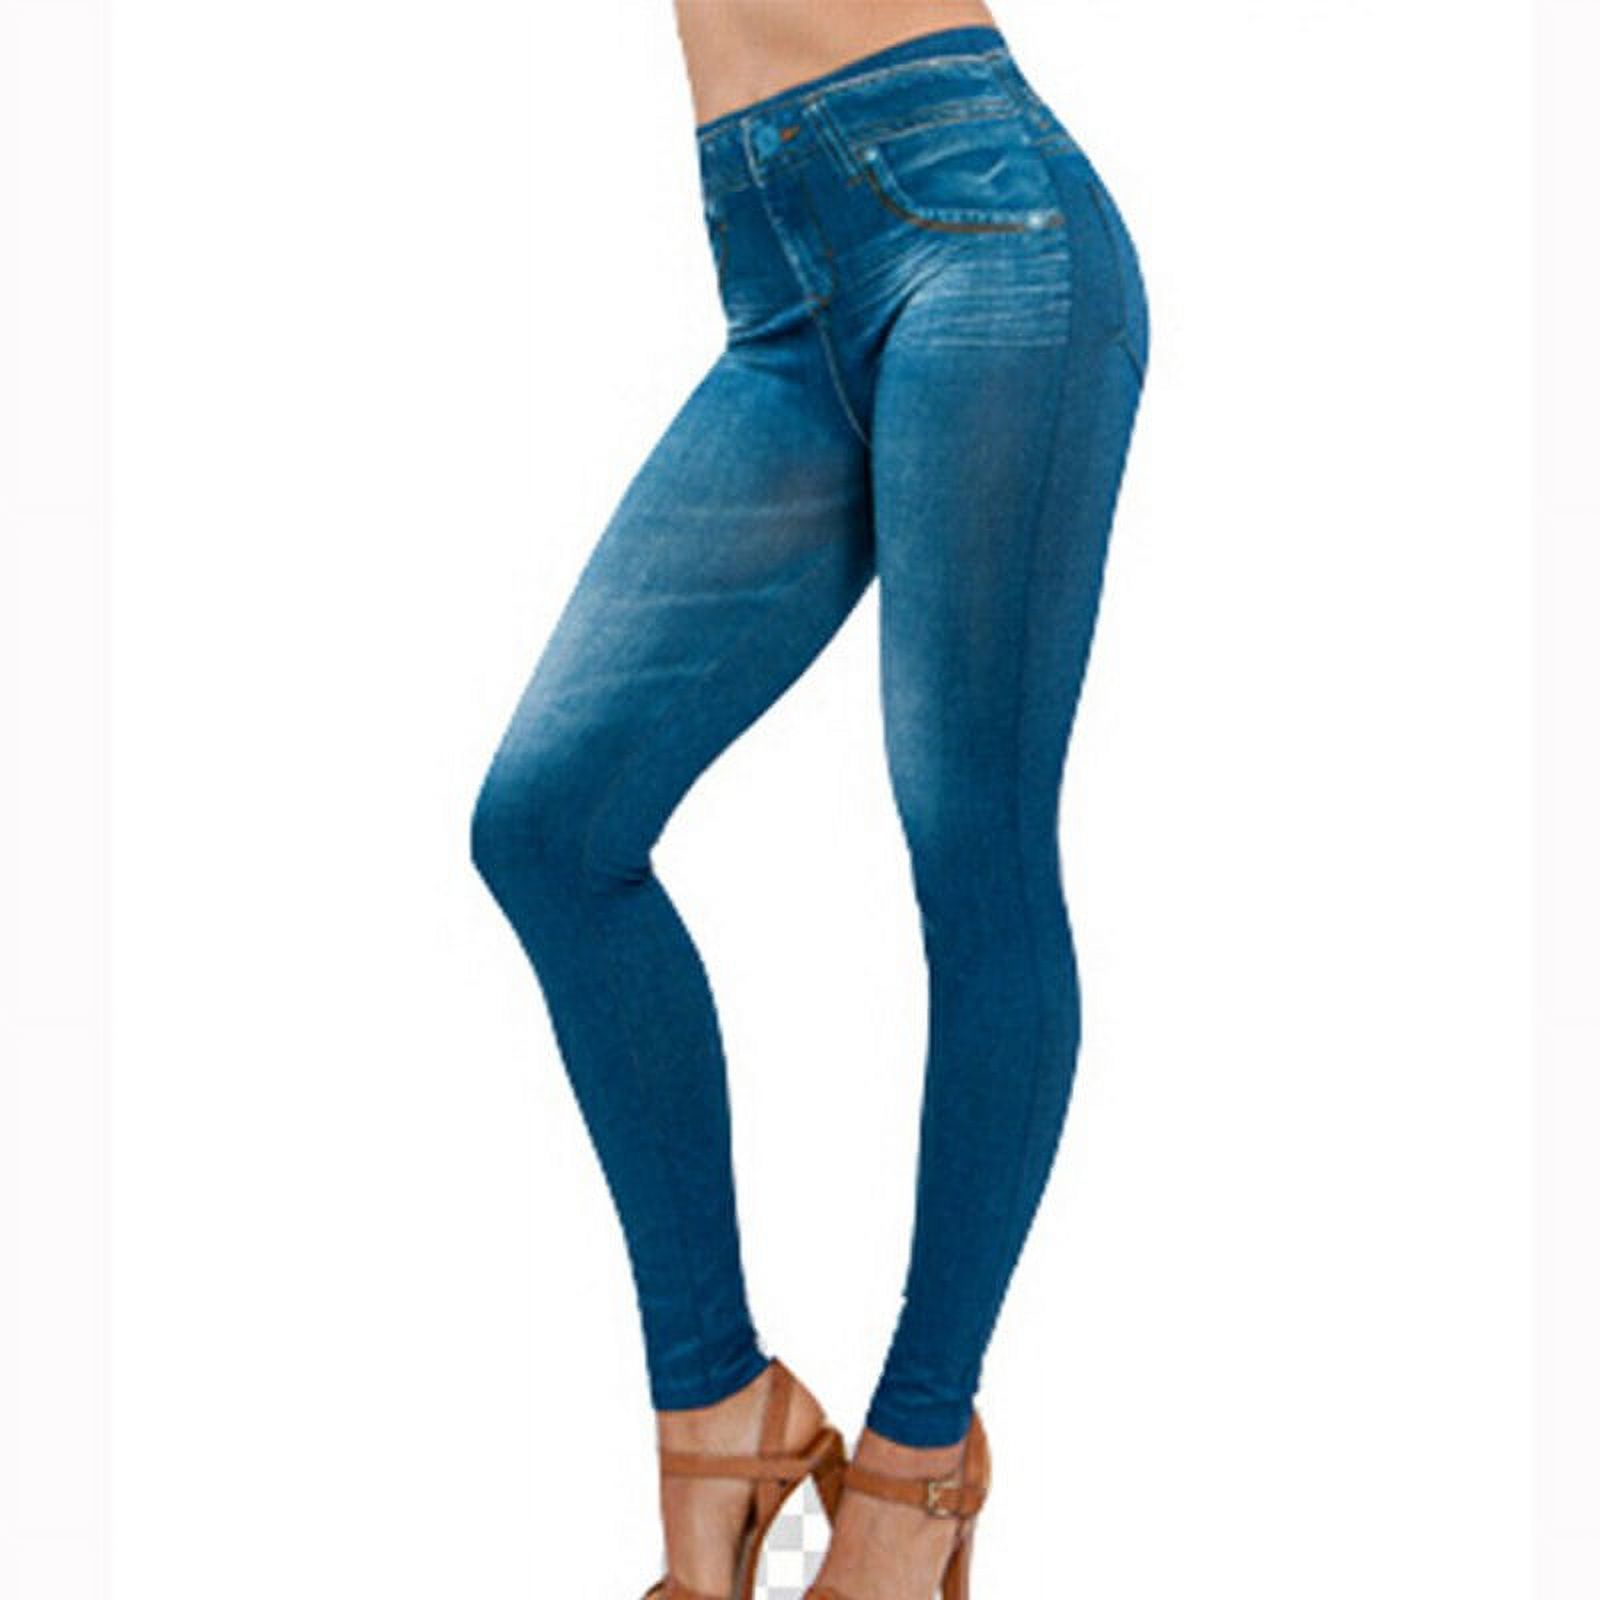 Save Money Jeans Leggings for Women Denim Pants with Pocket Slim Leggings Women Fitness Leggins Regular and Plus Size S-XXXL,Premium Breathable Cotton Jeggings for Women,Skinny Jeans,Clearance - image 1 of 3